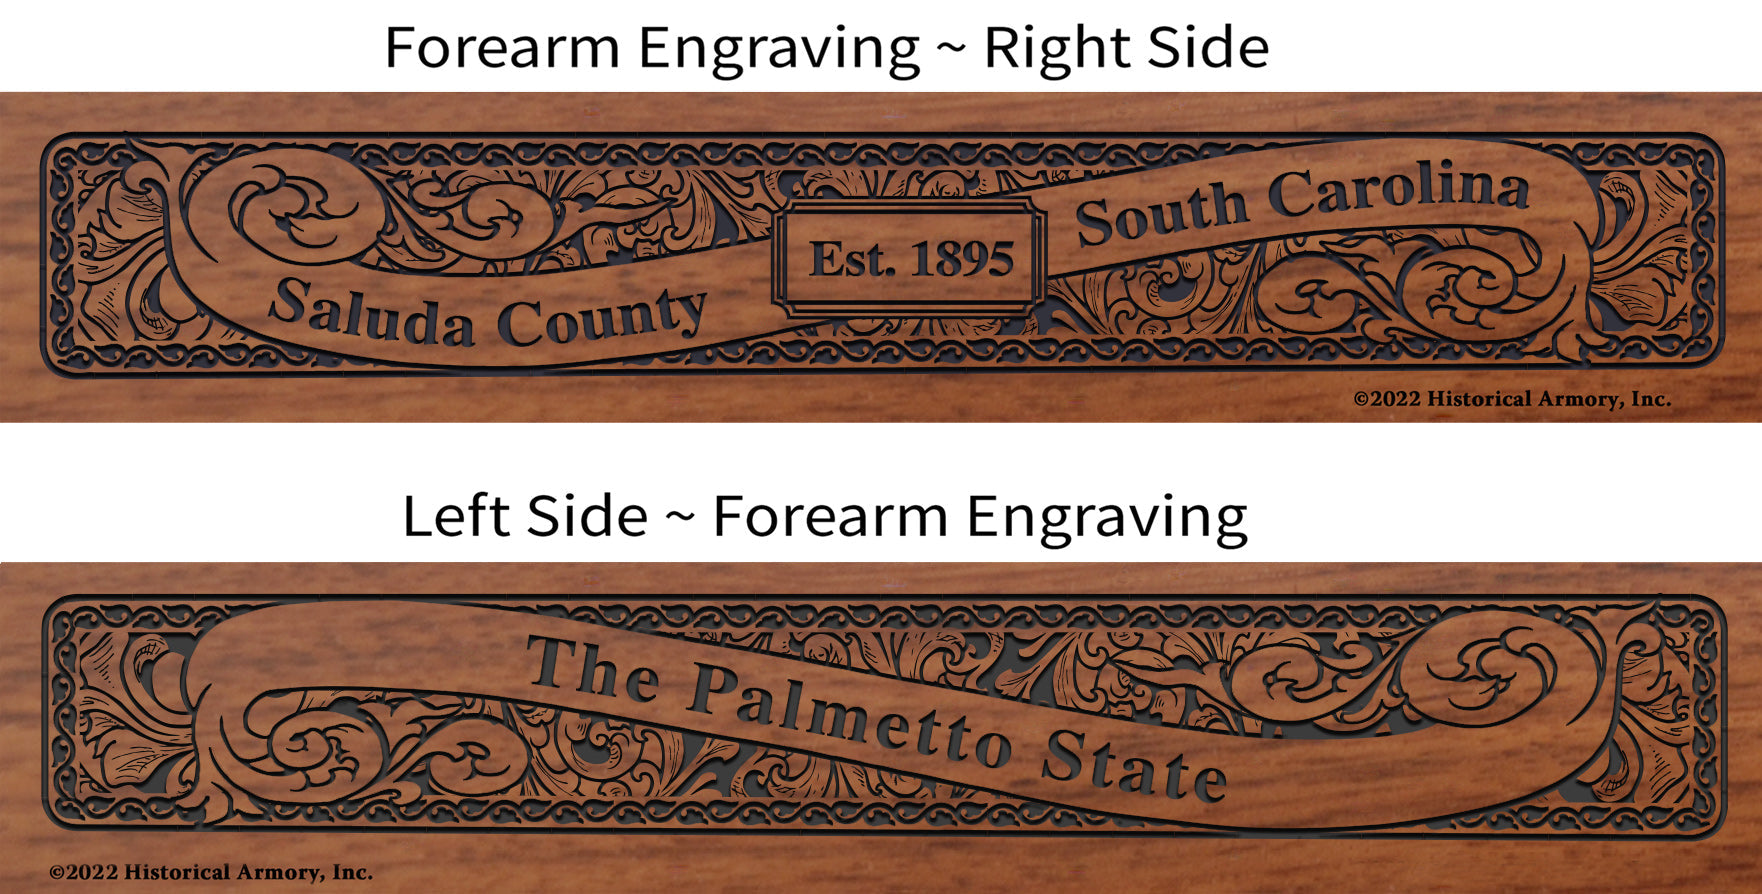 Saluda County South Carolina Engraved Rifle Forearm